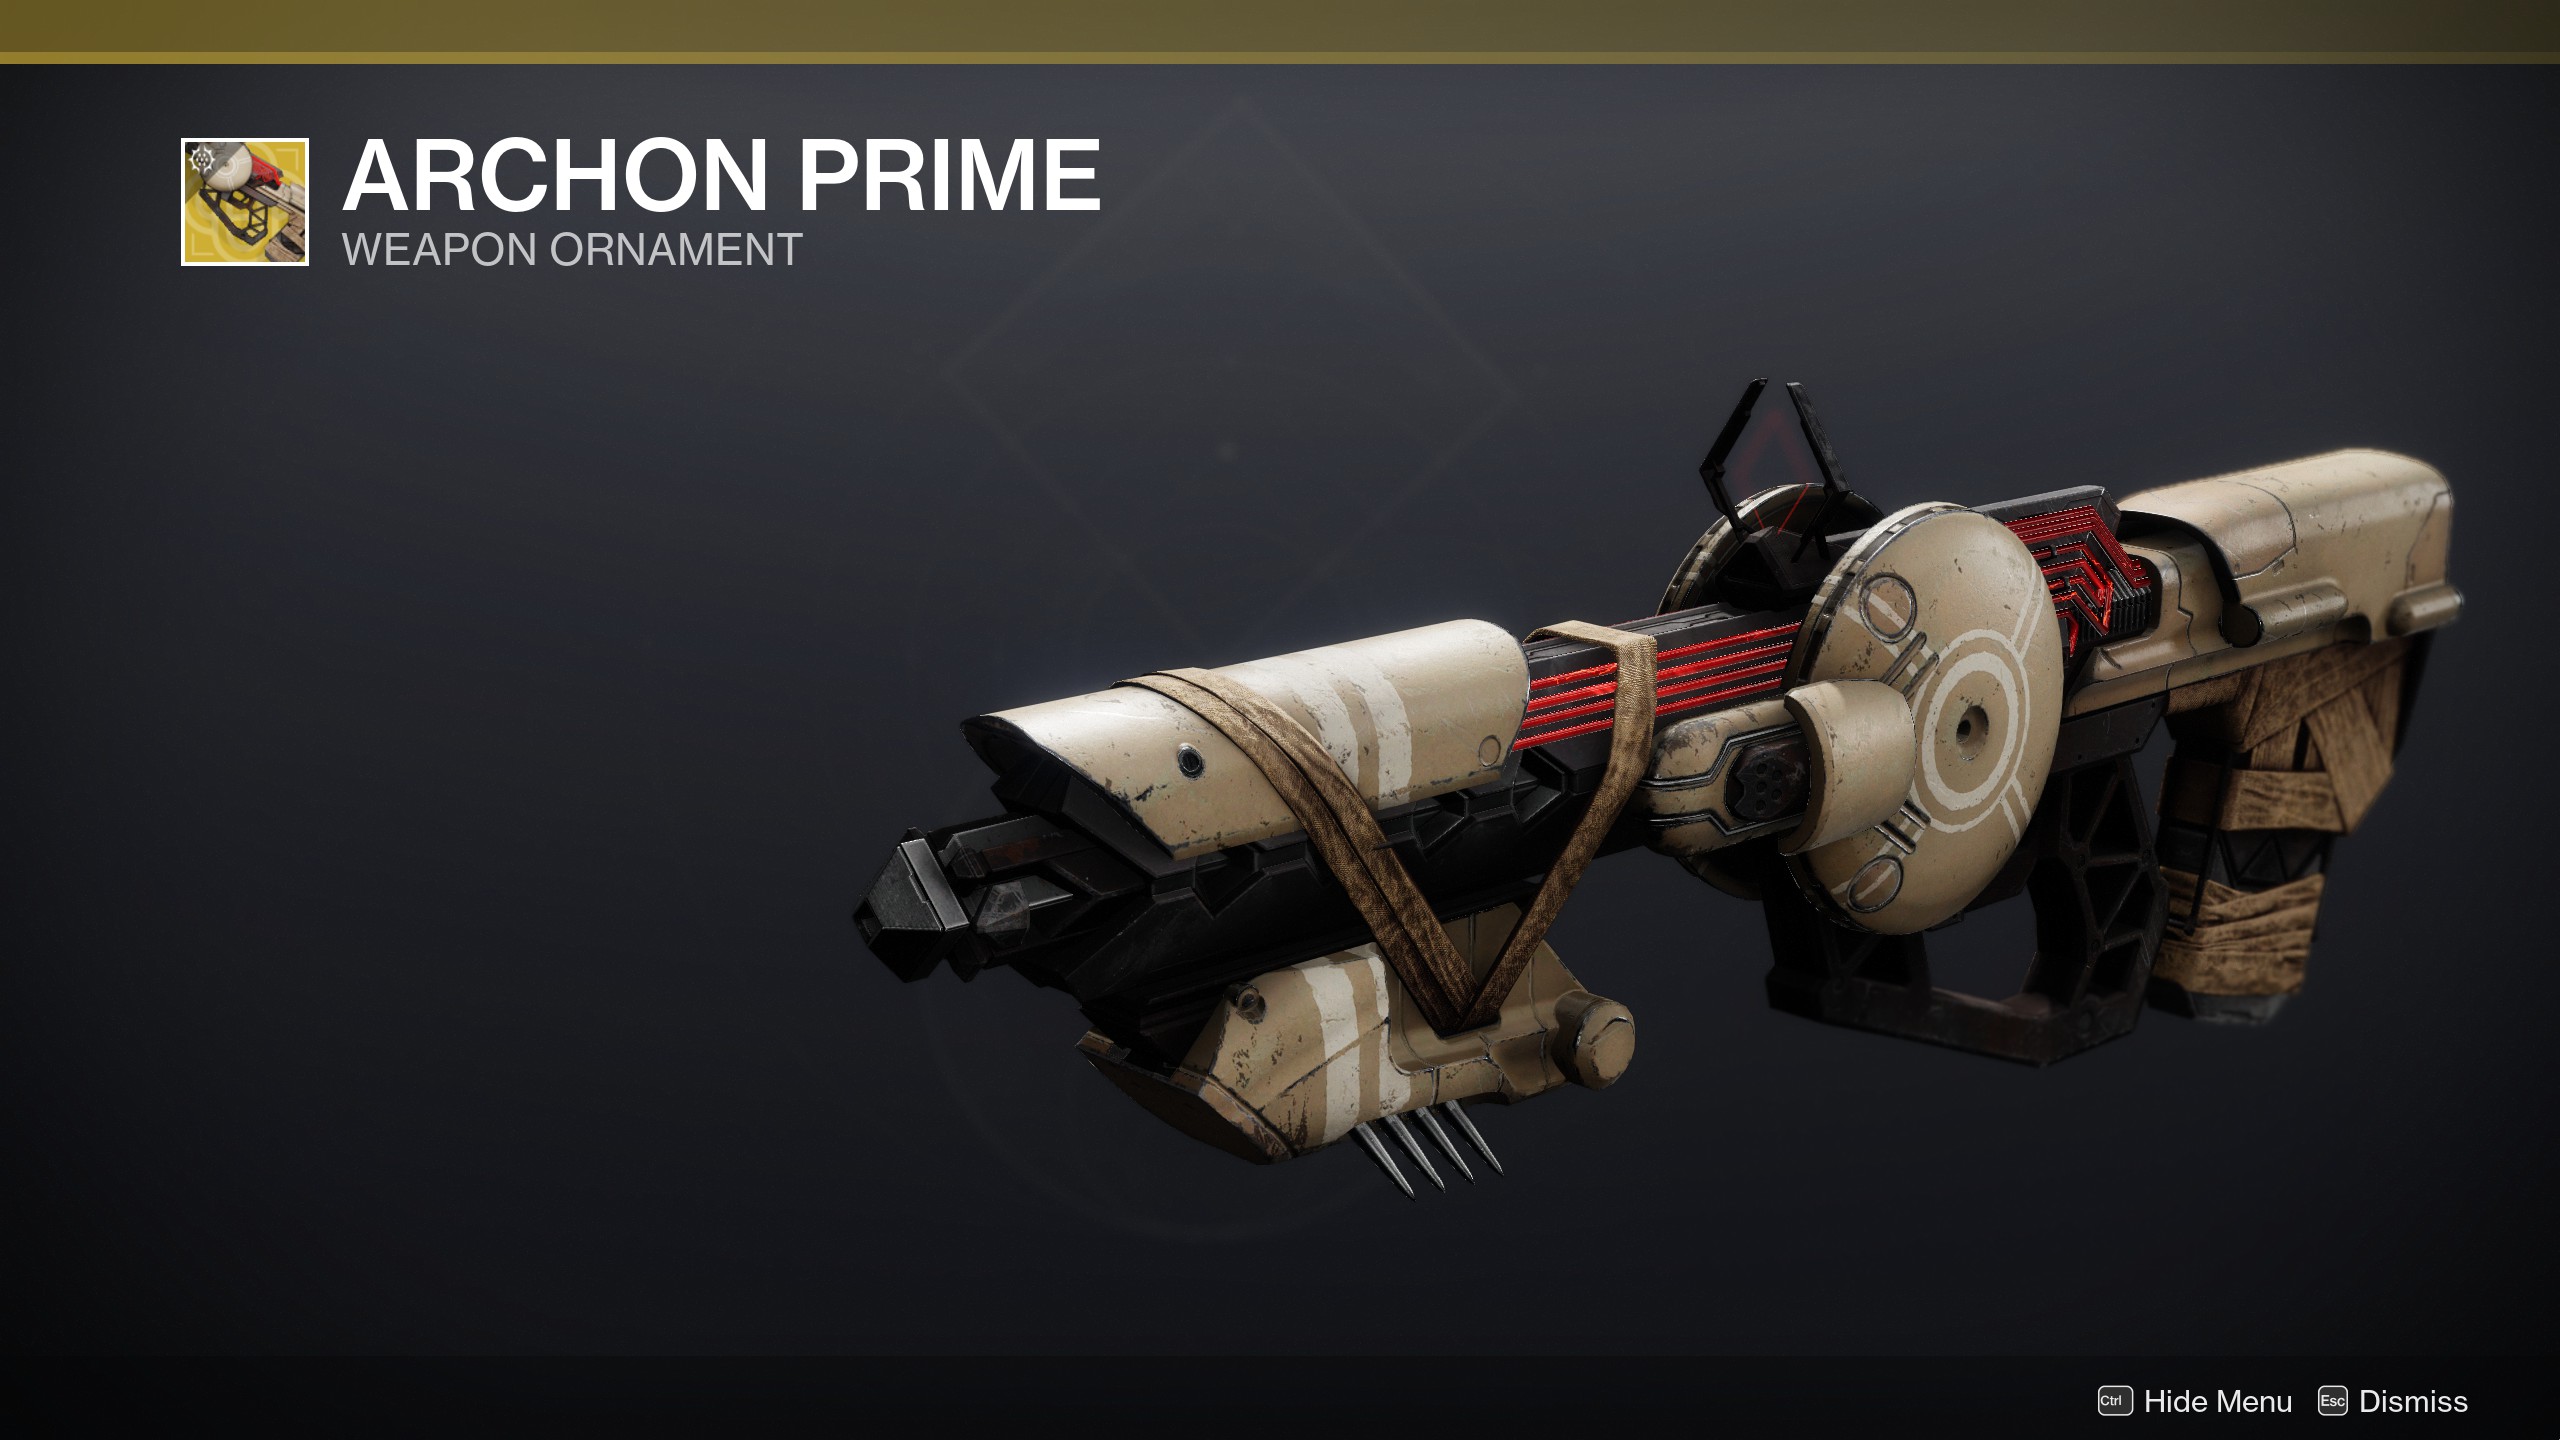 Destiny 2 Archon Prime ornament